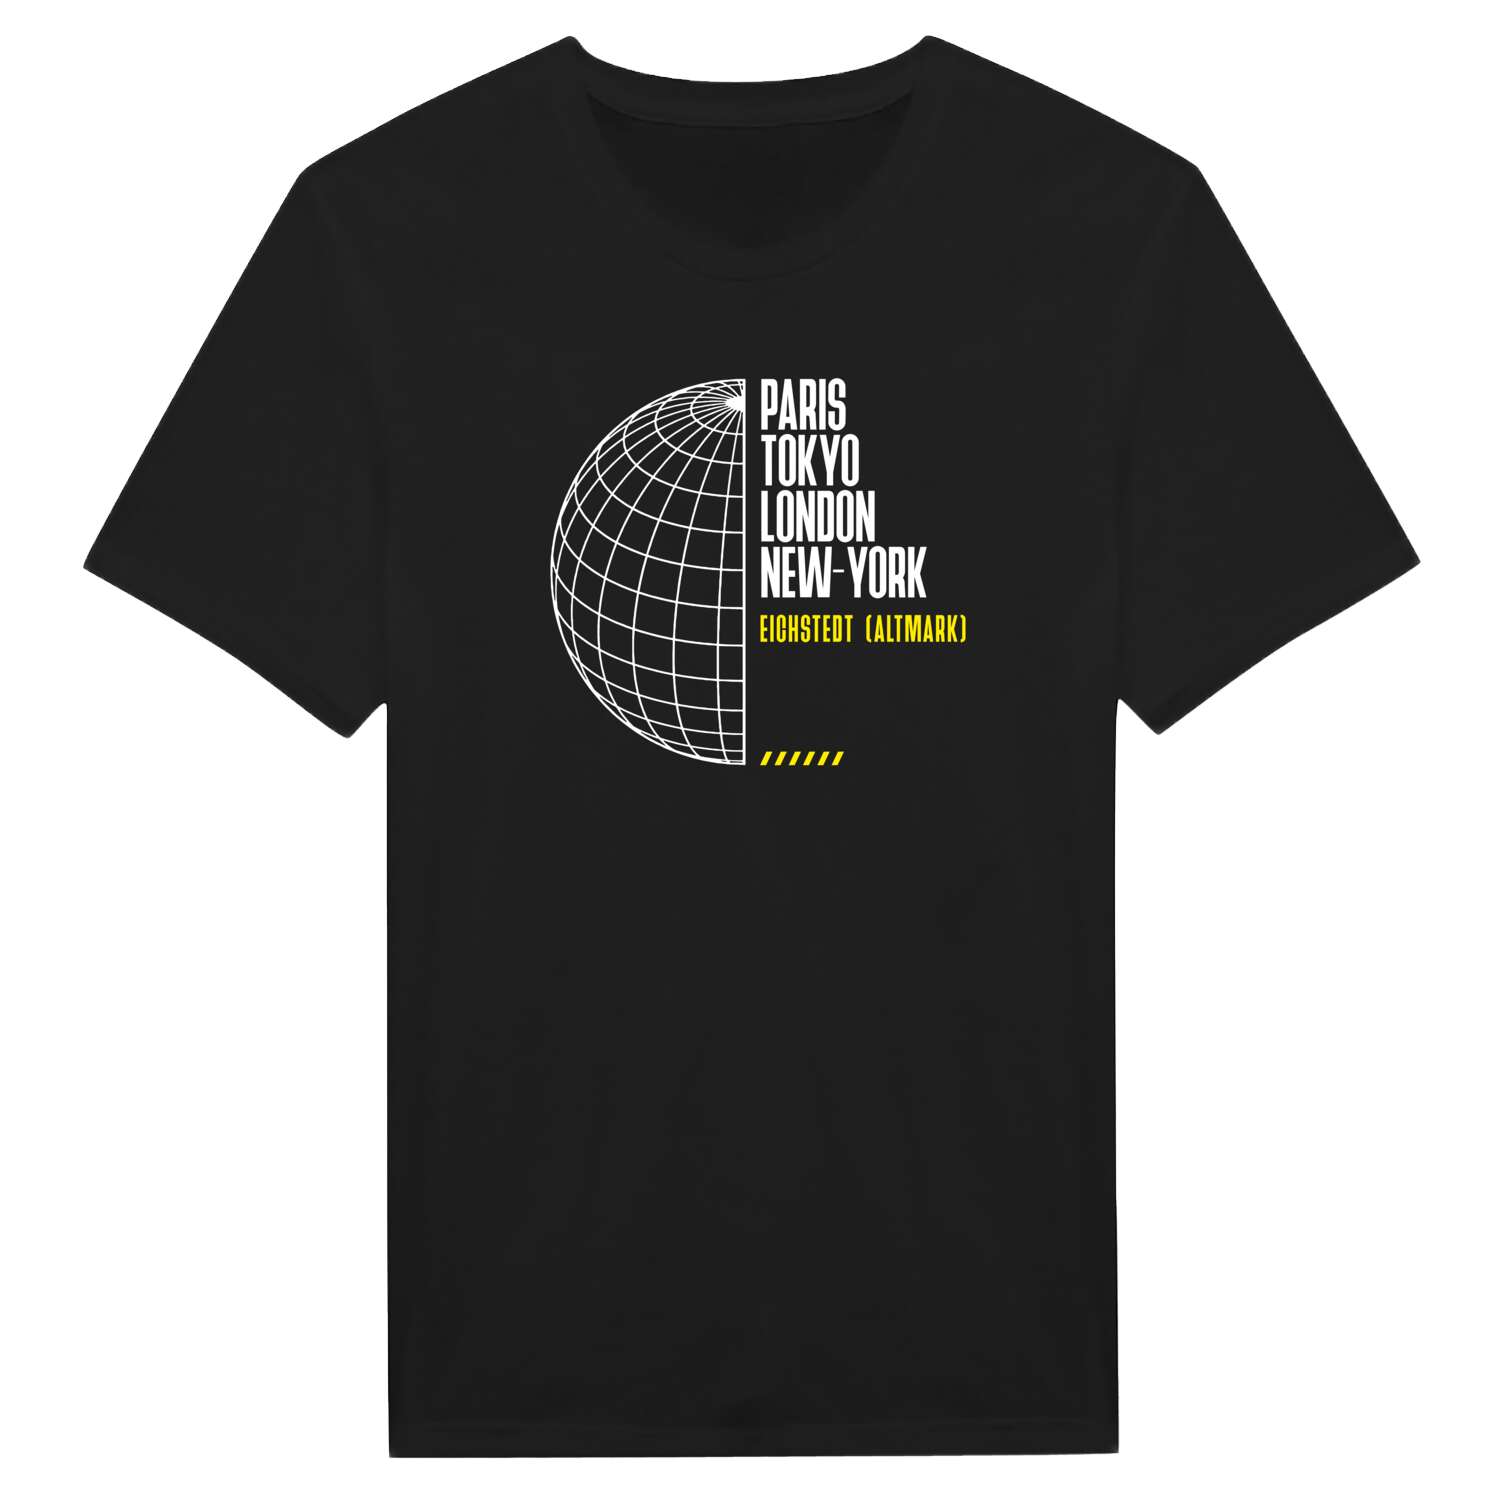 Eichstedt (Altmark) T-Shirt »Paris Tokyo London«